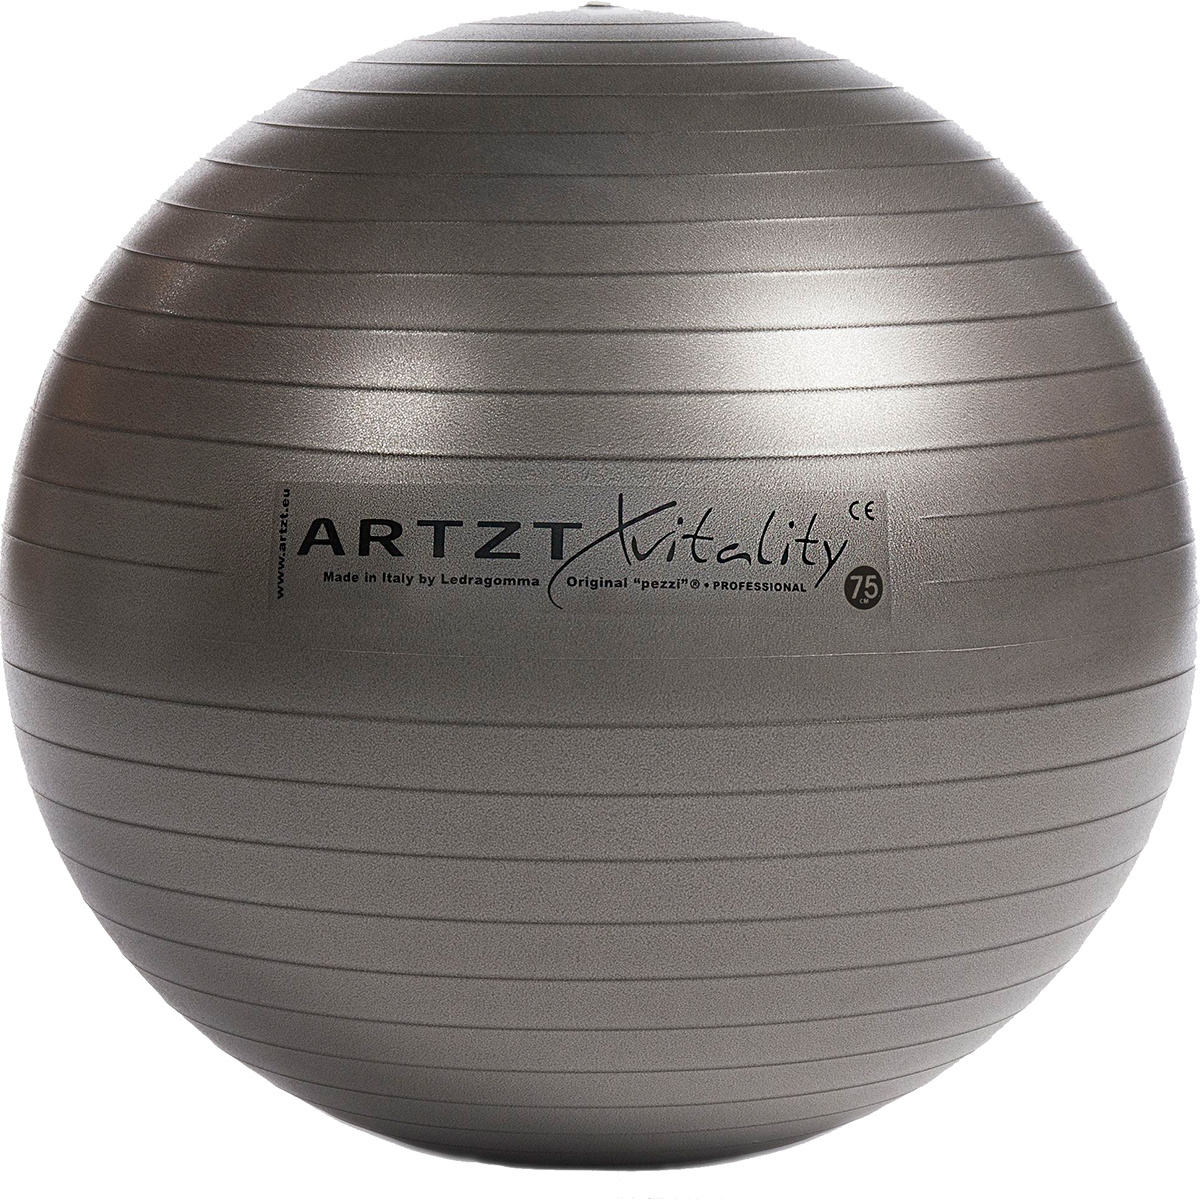 Image of Artzt vitality Vitality Fitness-Ball Professional